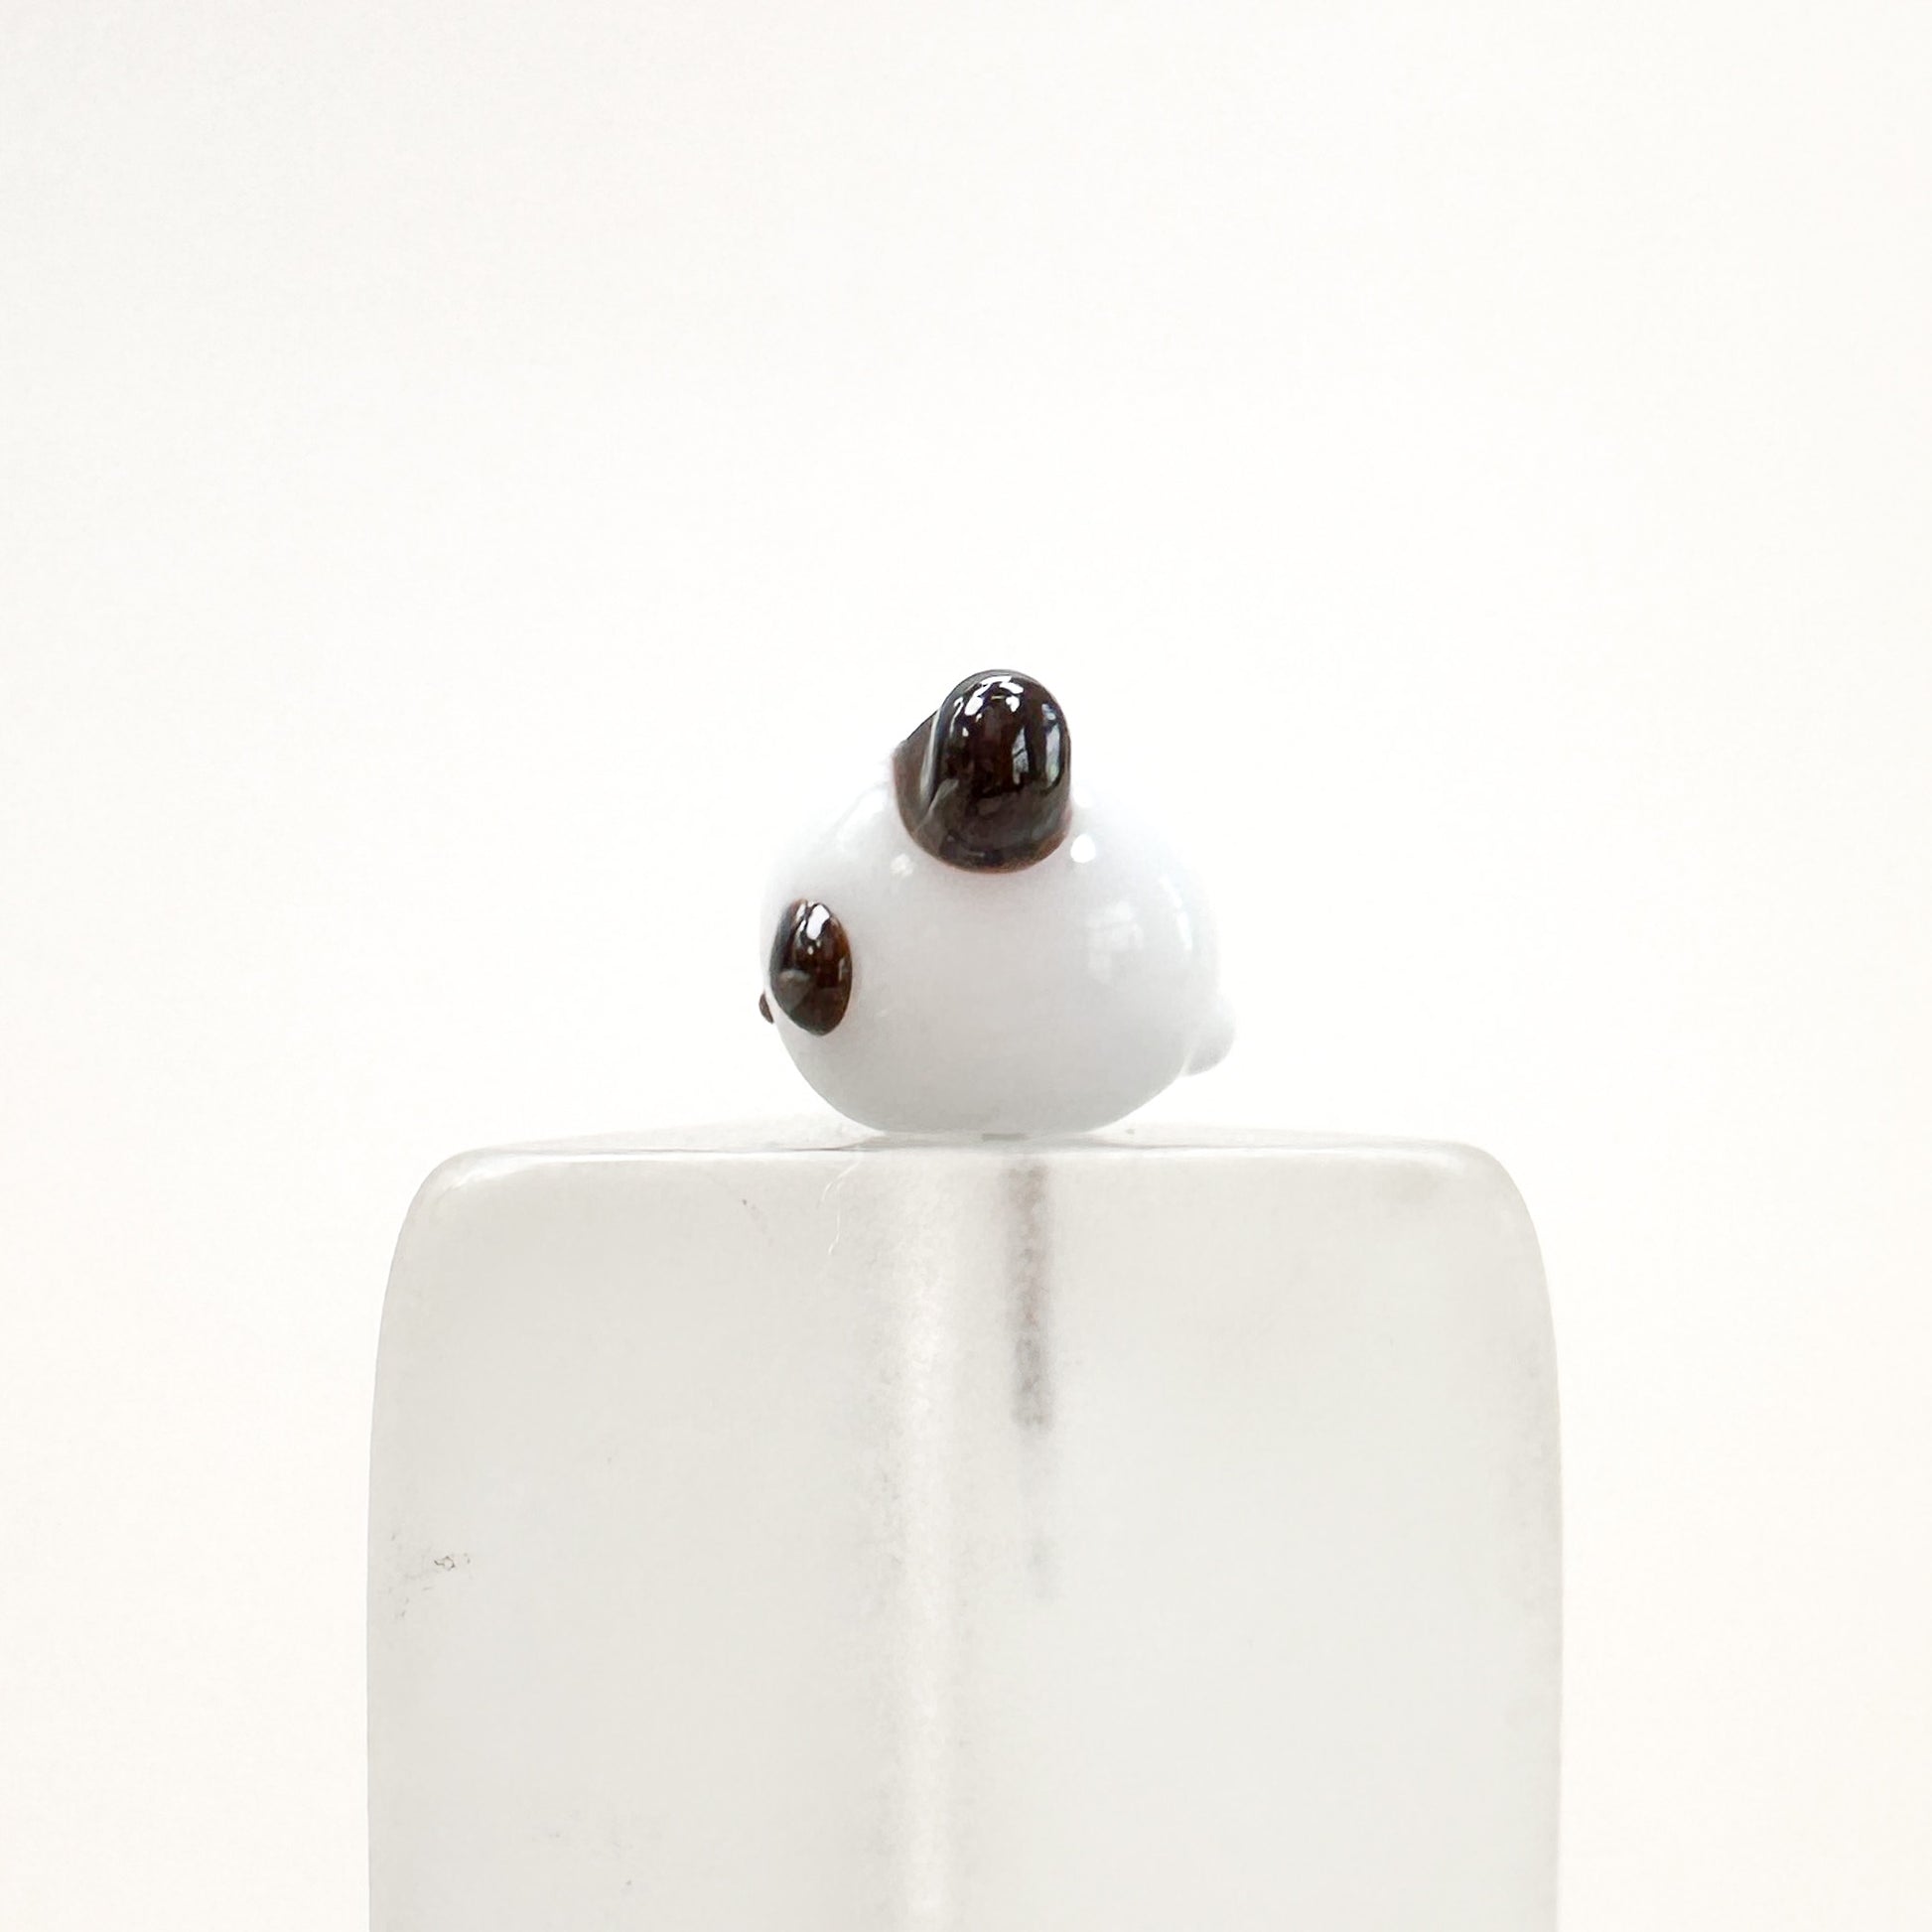 Chibi Handmade Glass Beads - Panda (2 Color Options) - 1 pc.-The Bead Gallery Honolulu